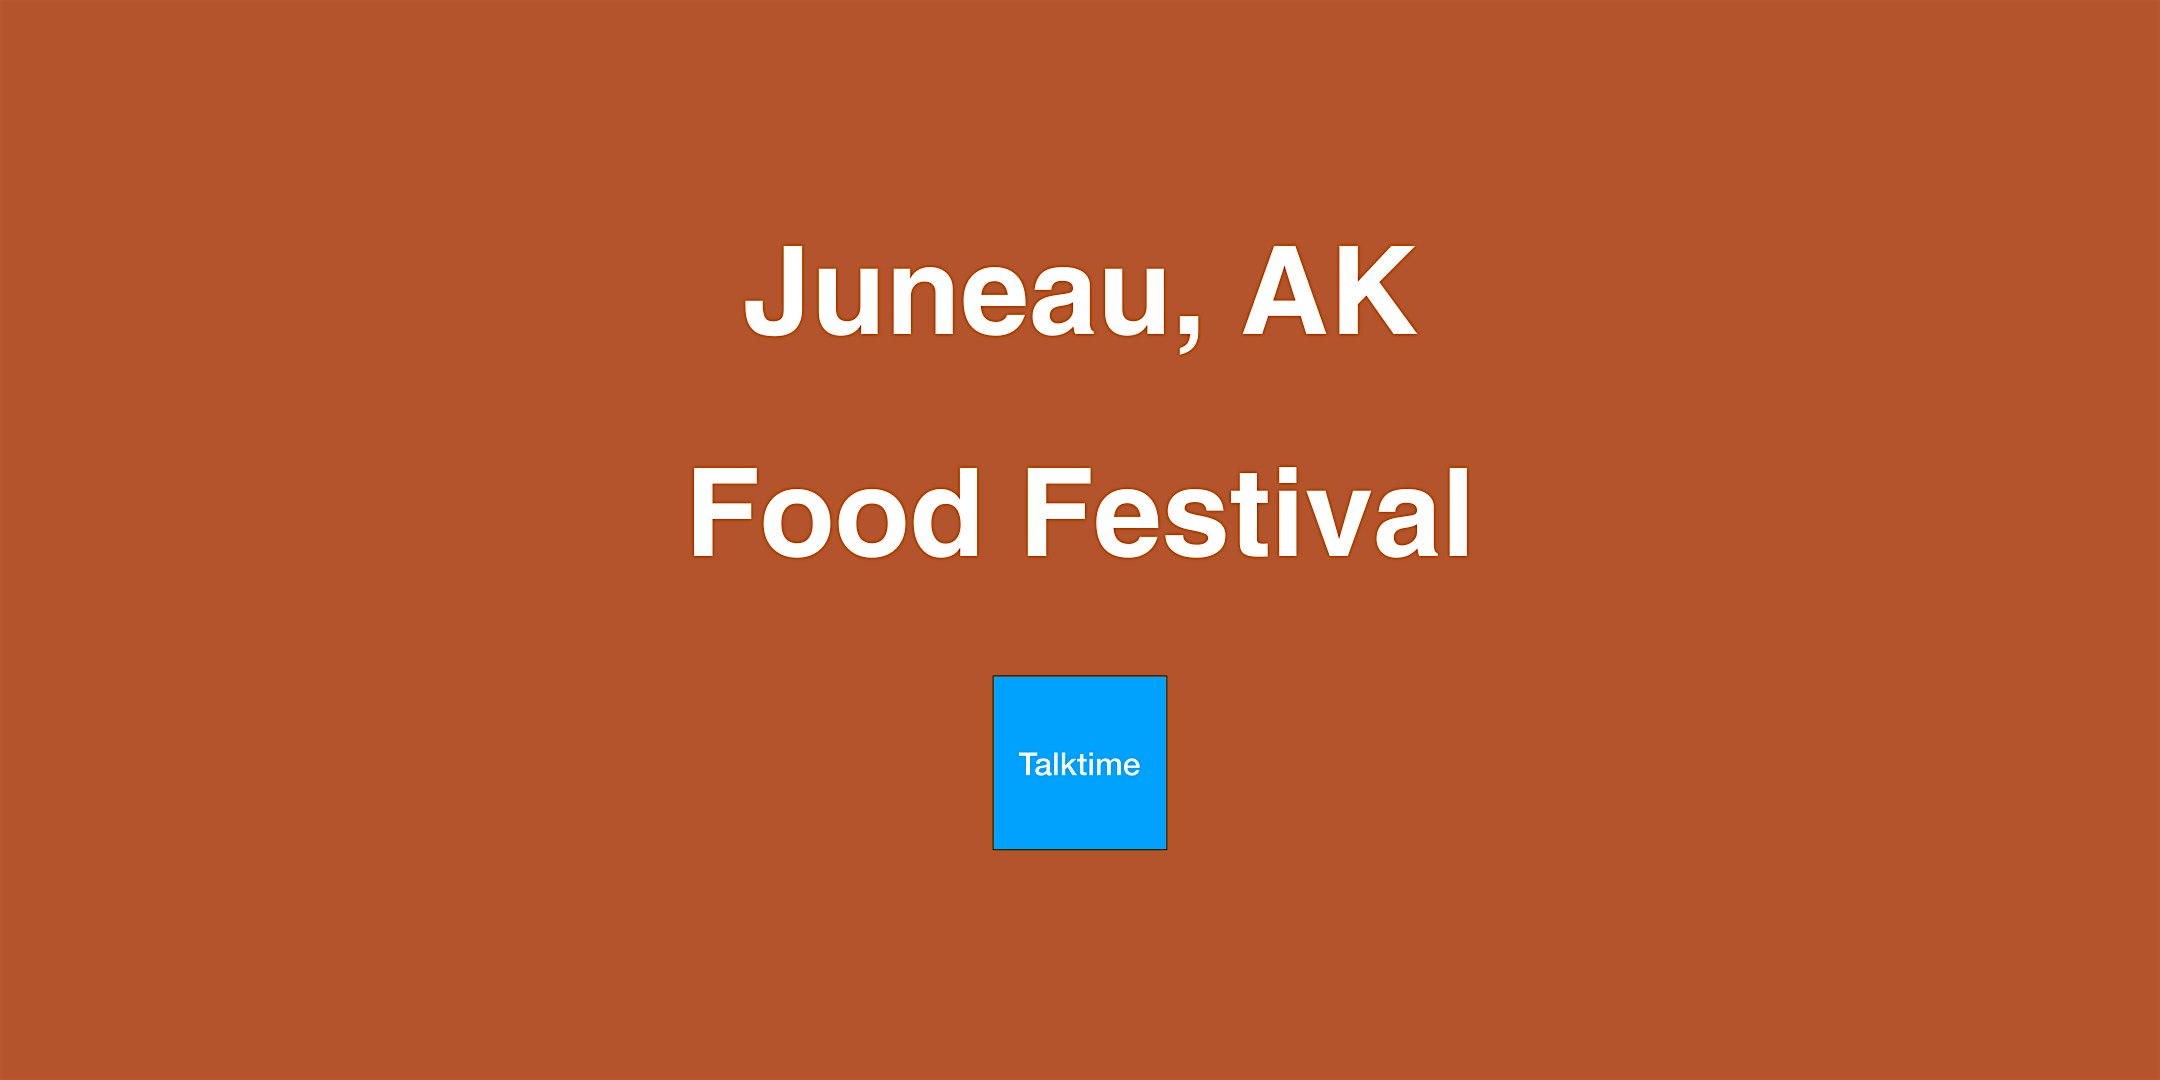 Food Festival - Juneau